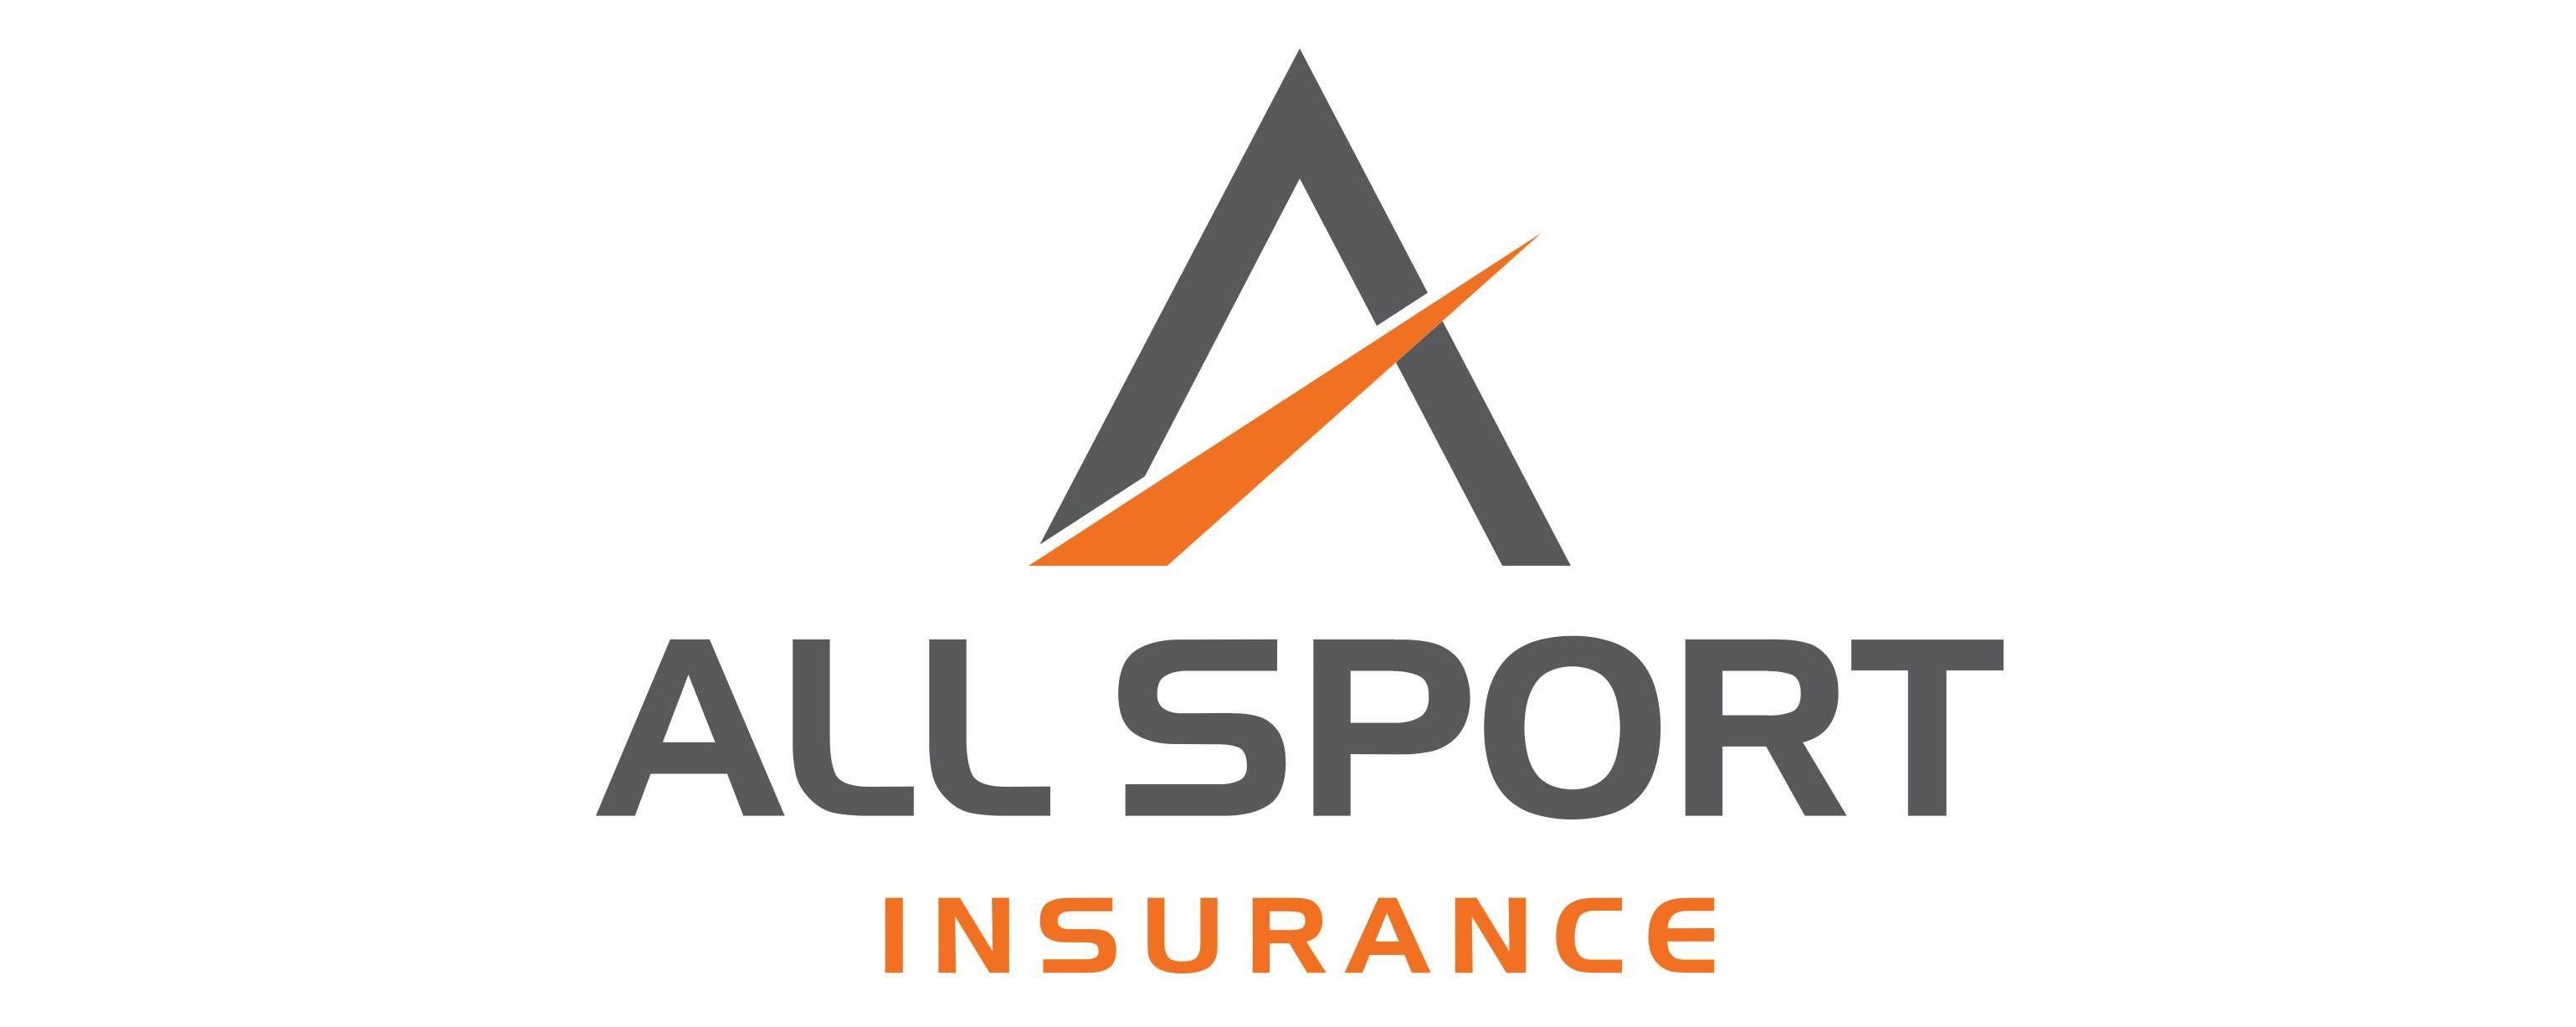 Triangle Insurance Logo - Homepage. All Sport Insurance Sport Insurance